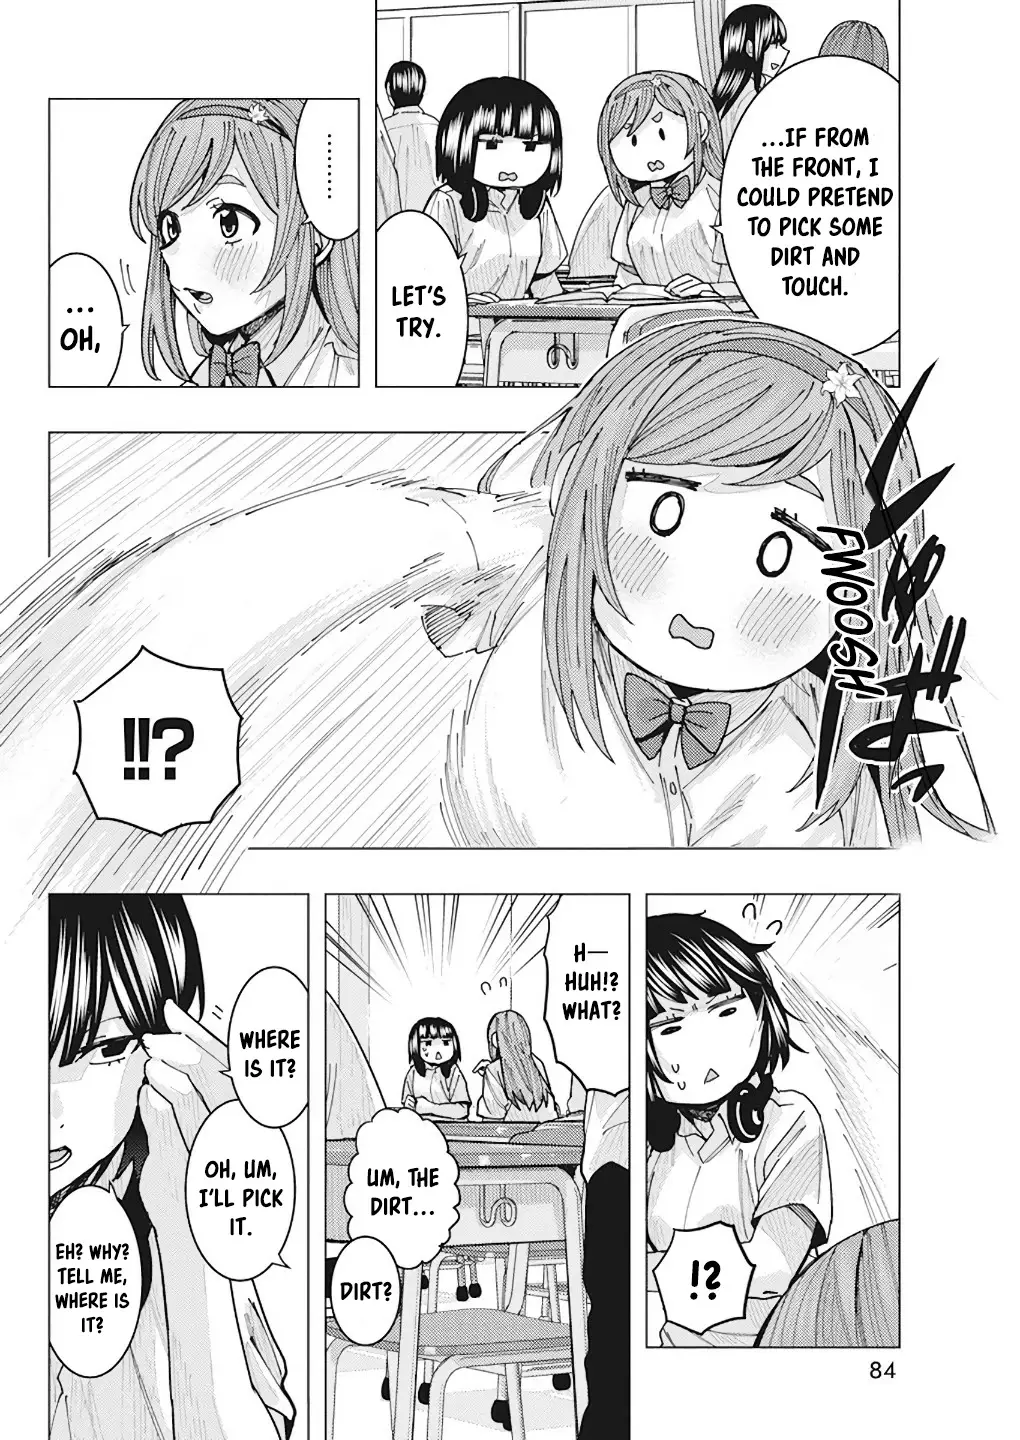 "nobukuni-San" Does She Like Me? - 13 page 10-b85b8001